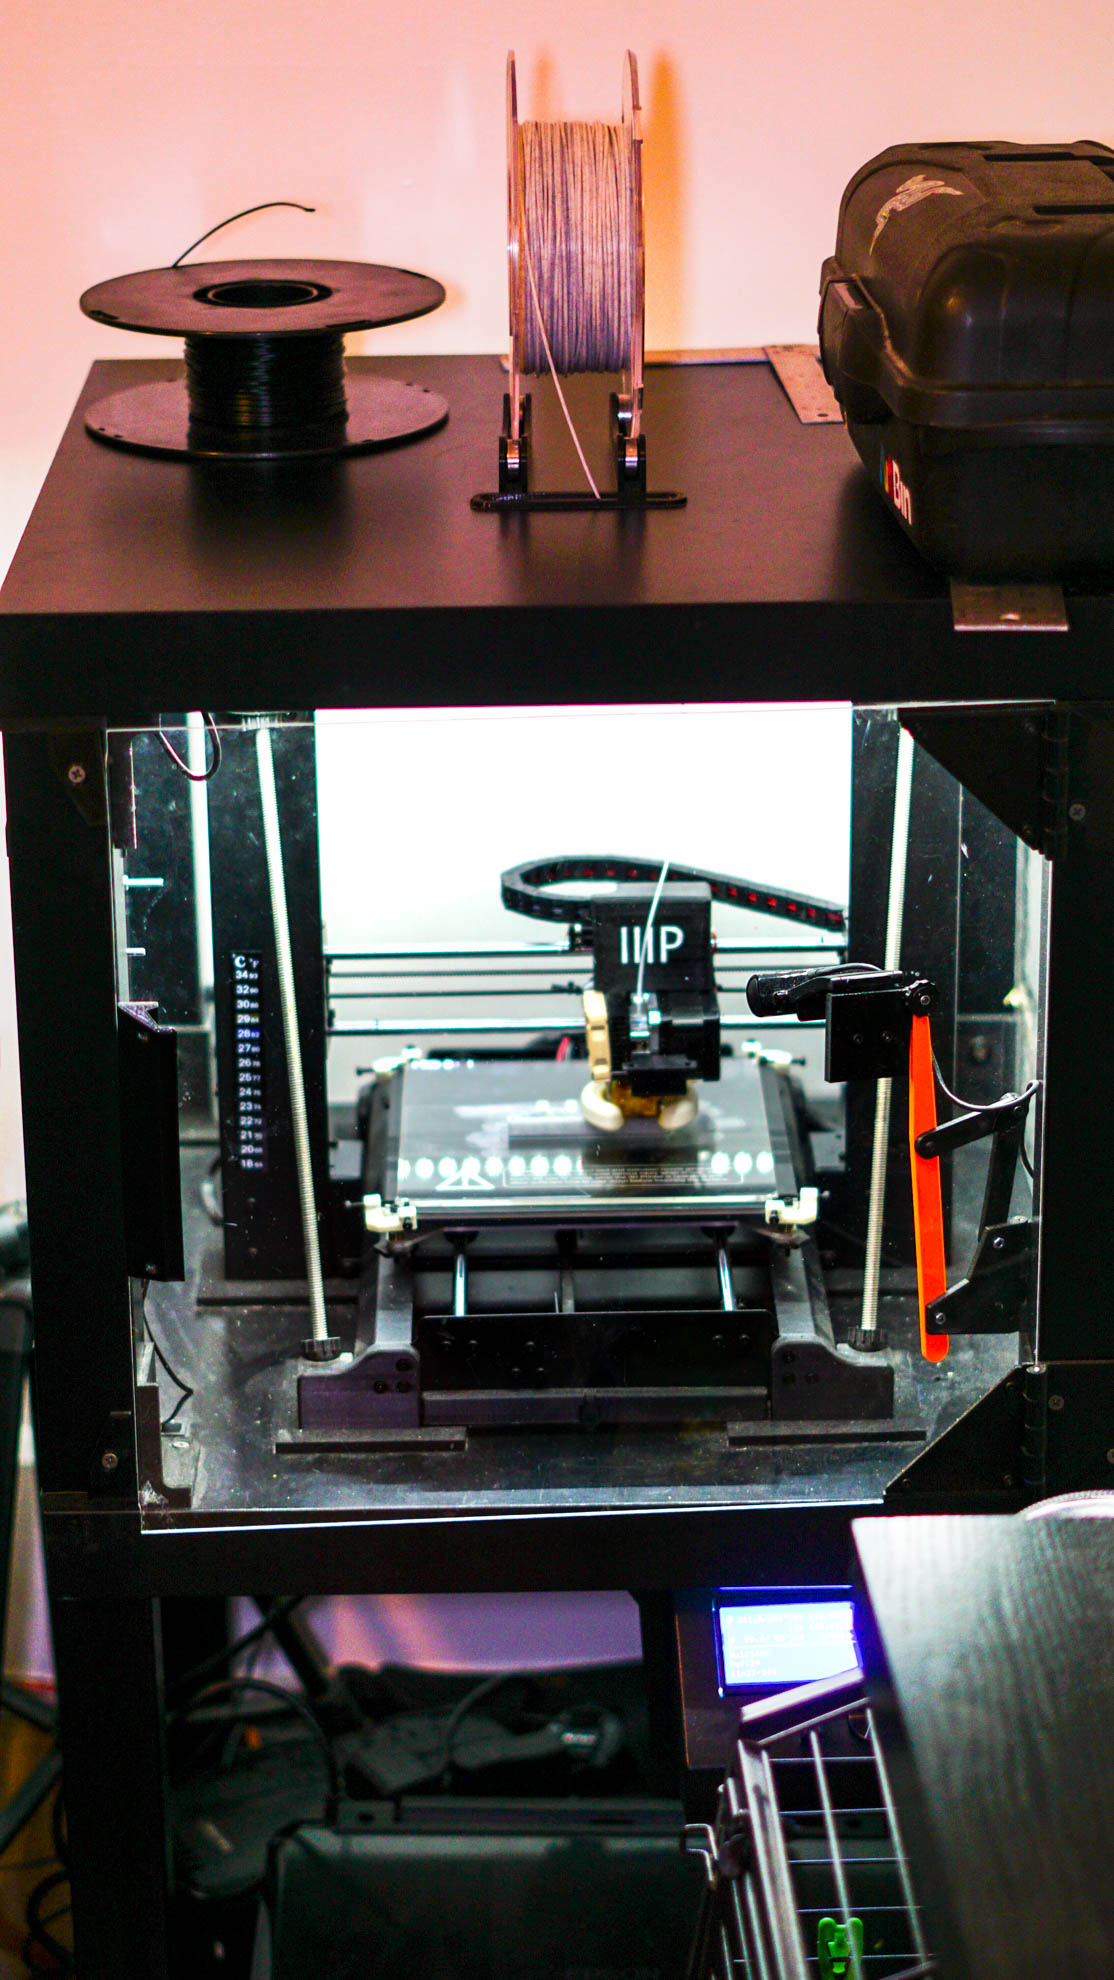 3D Printing Basics - Saturate Life